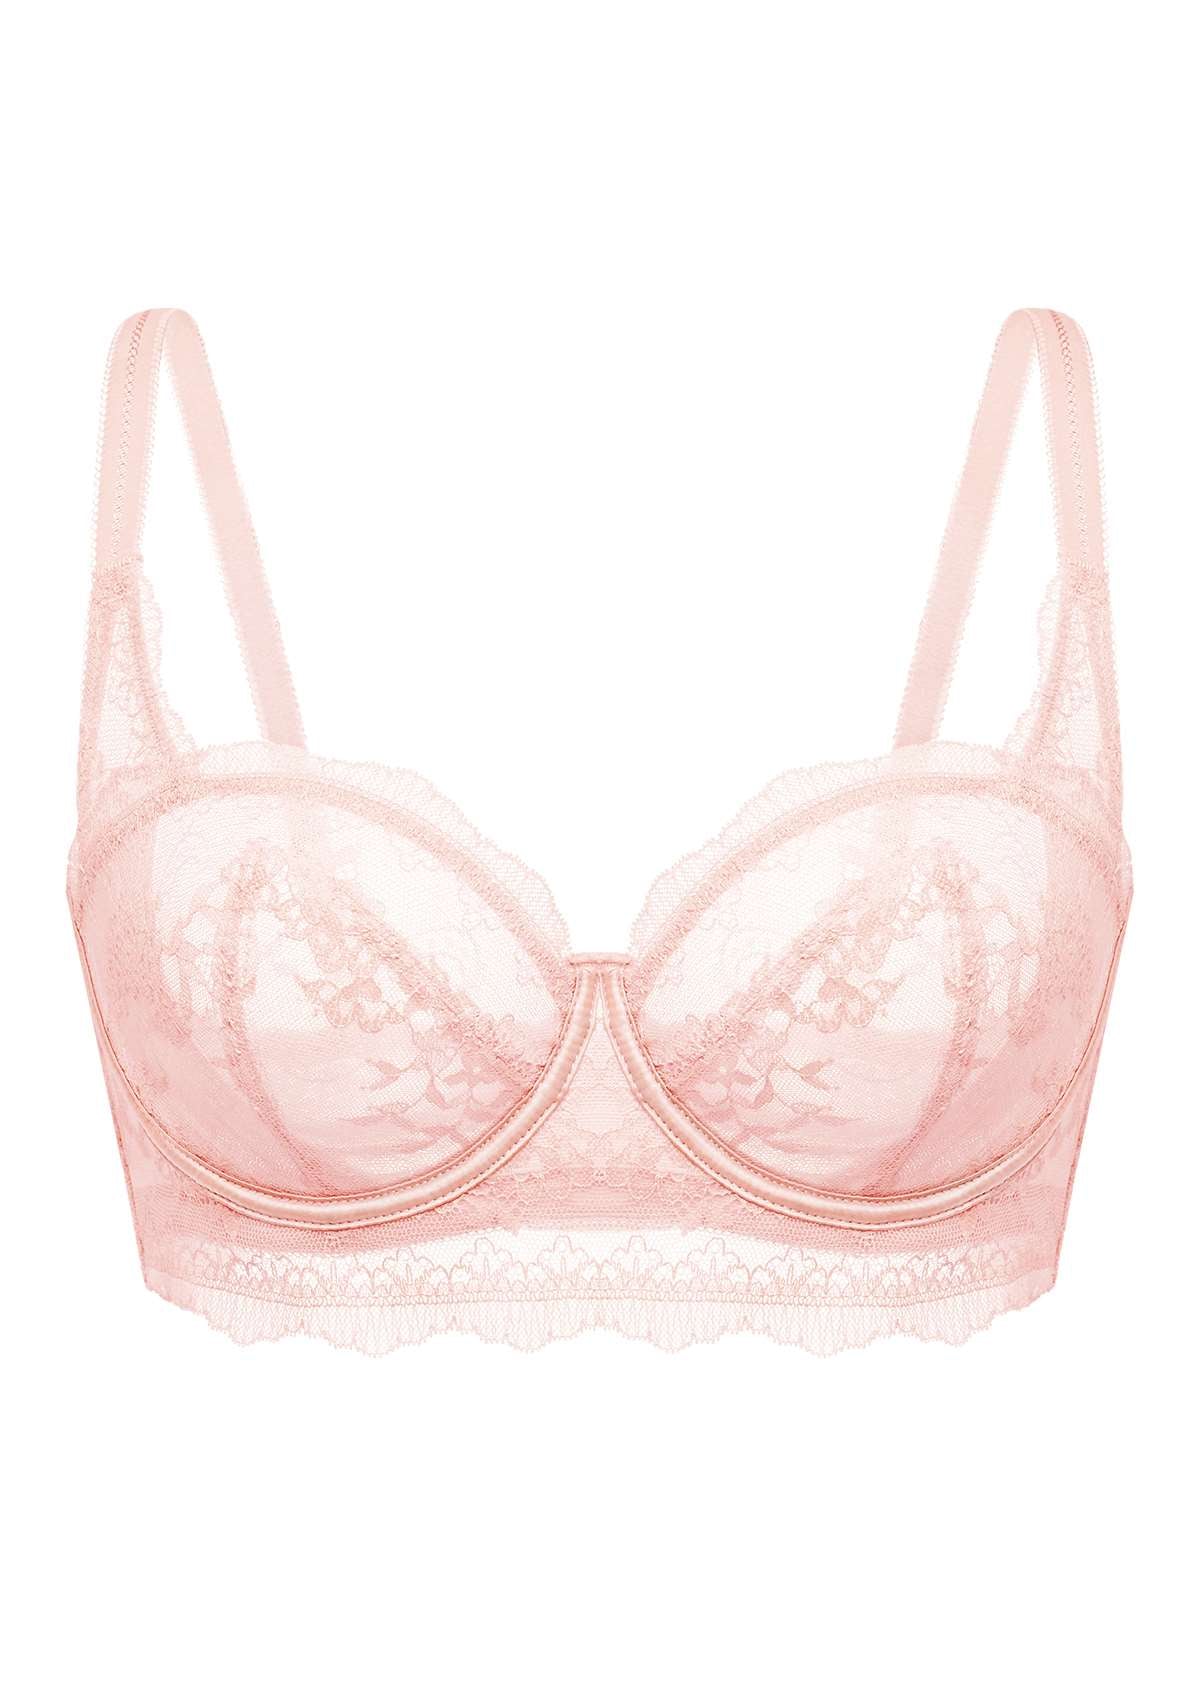 HSIA Floral Lace Unlined Bridal Balconette Delicate Bra Panty Set - Pink / 38 / C